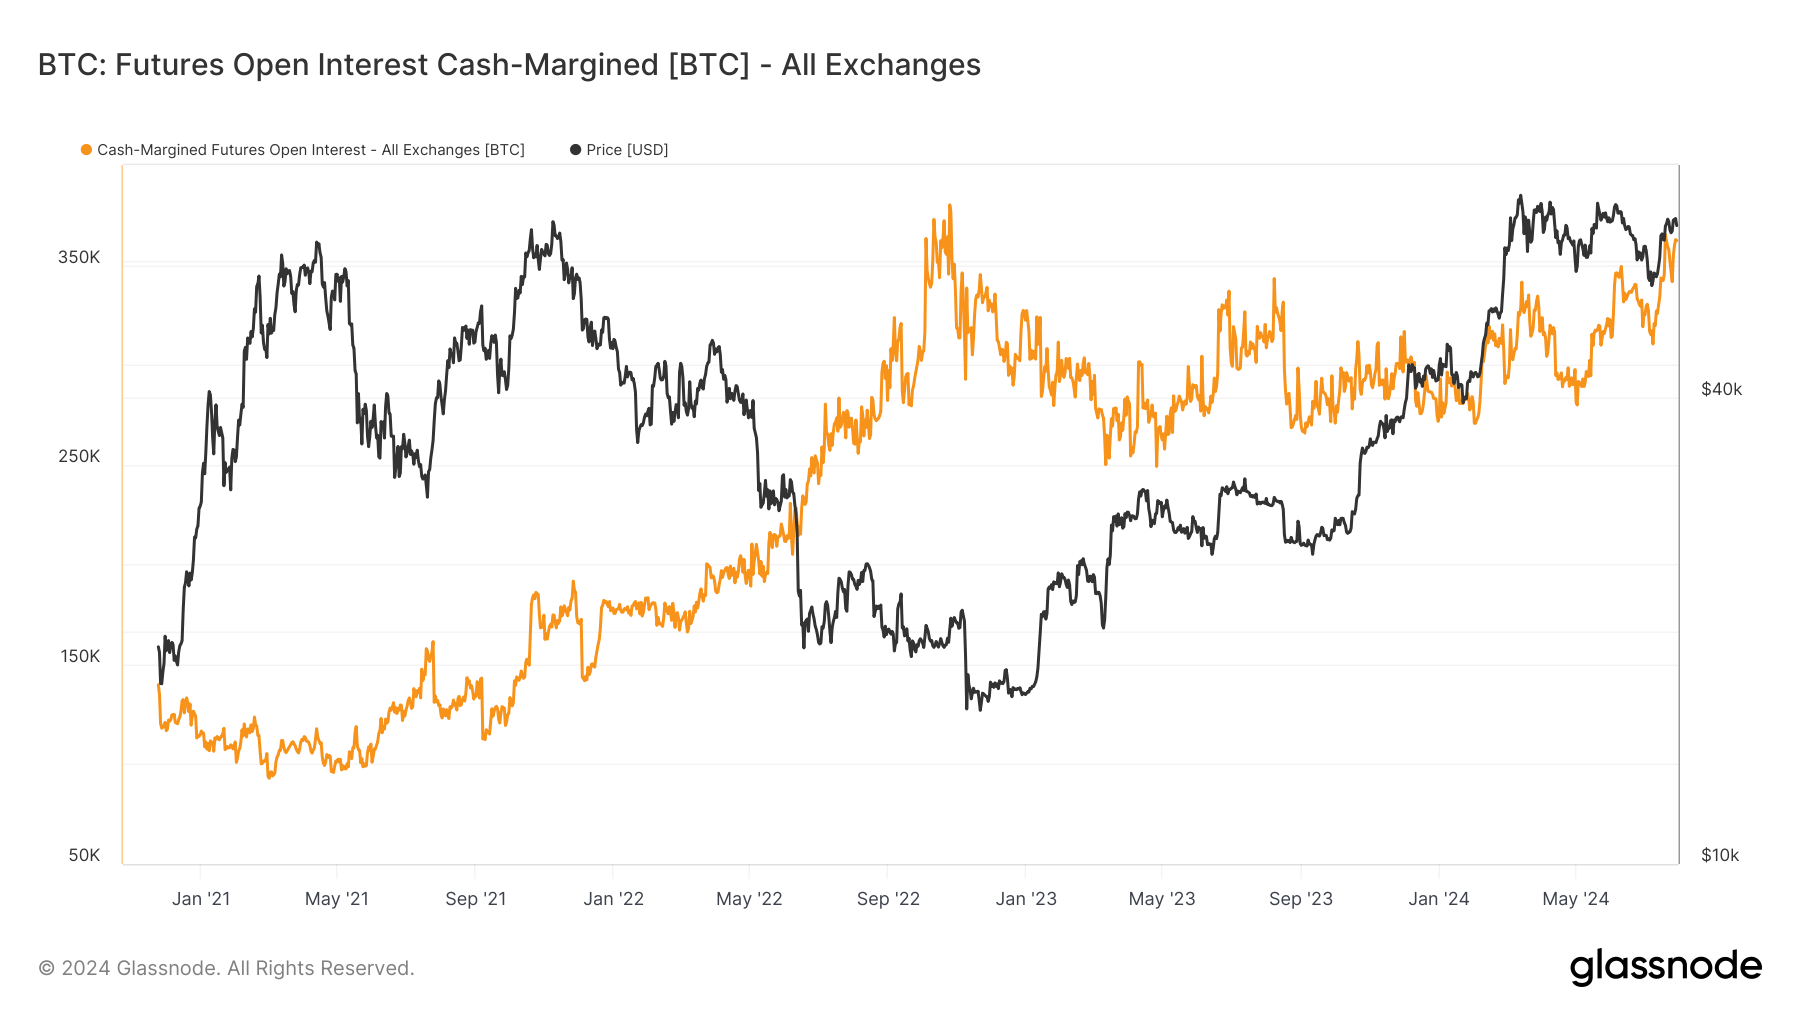 BTC: Futures Open Interest Cash-Margined: (Source: Glassnode)